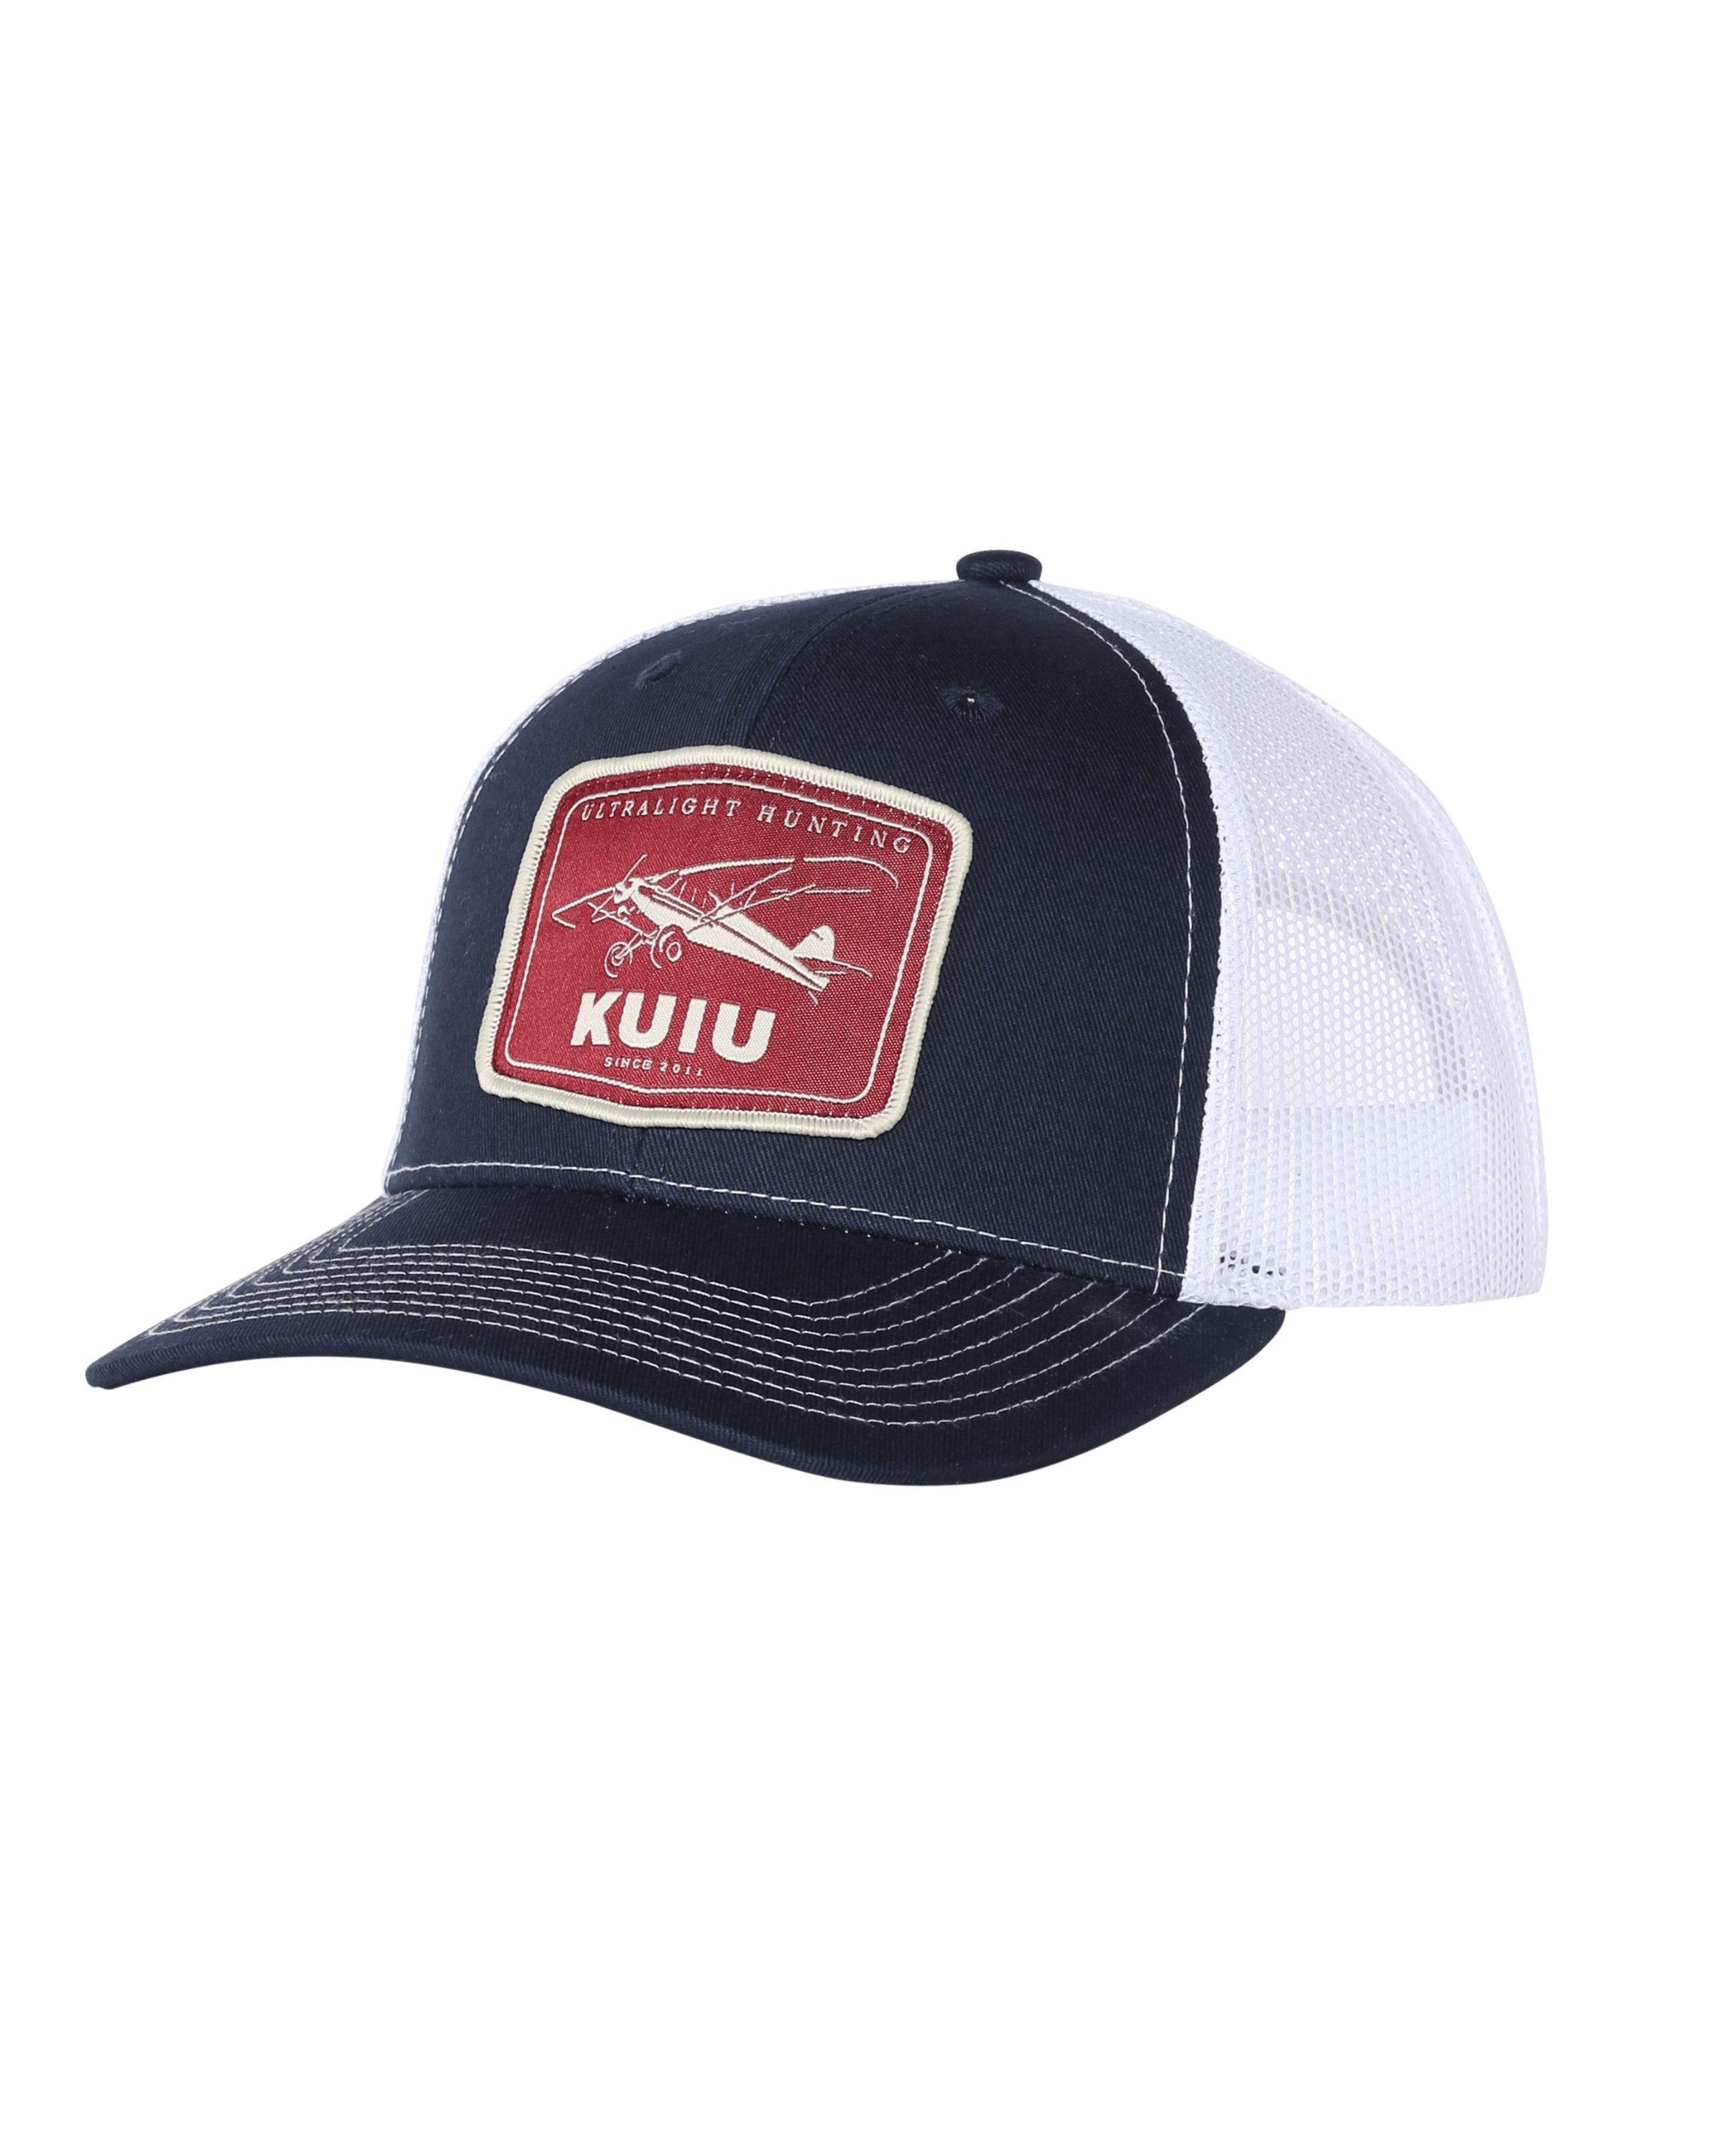 KUIU Bush Plane Hat in Navy/White